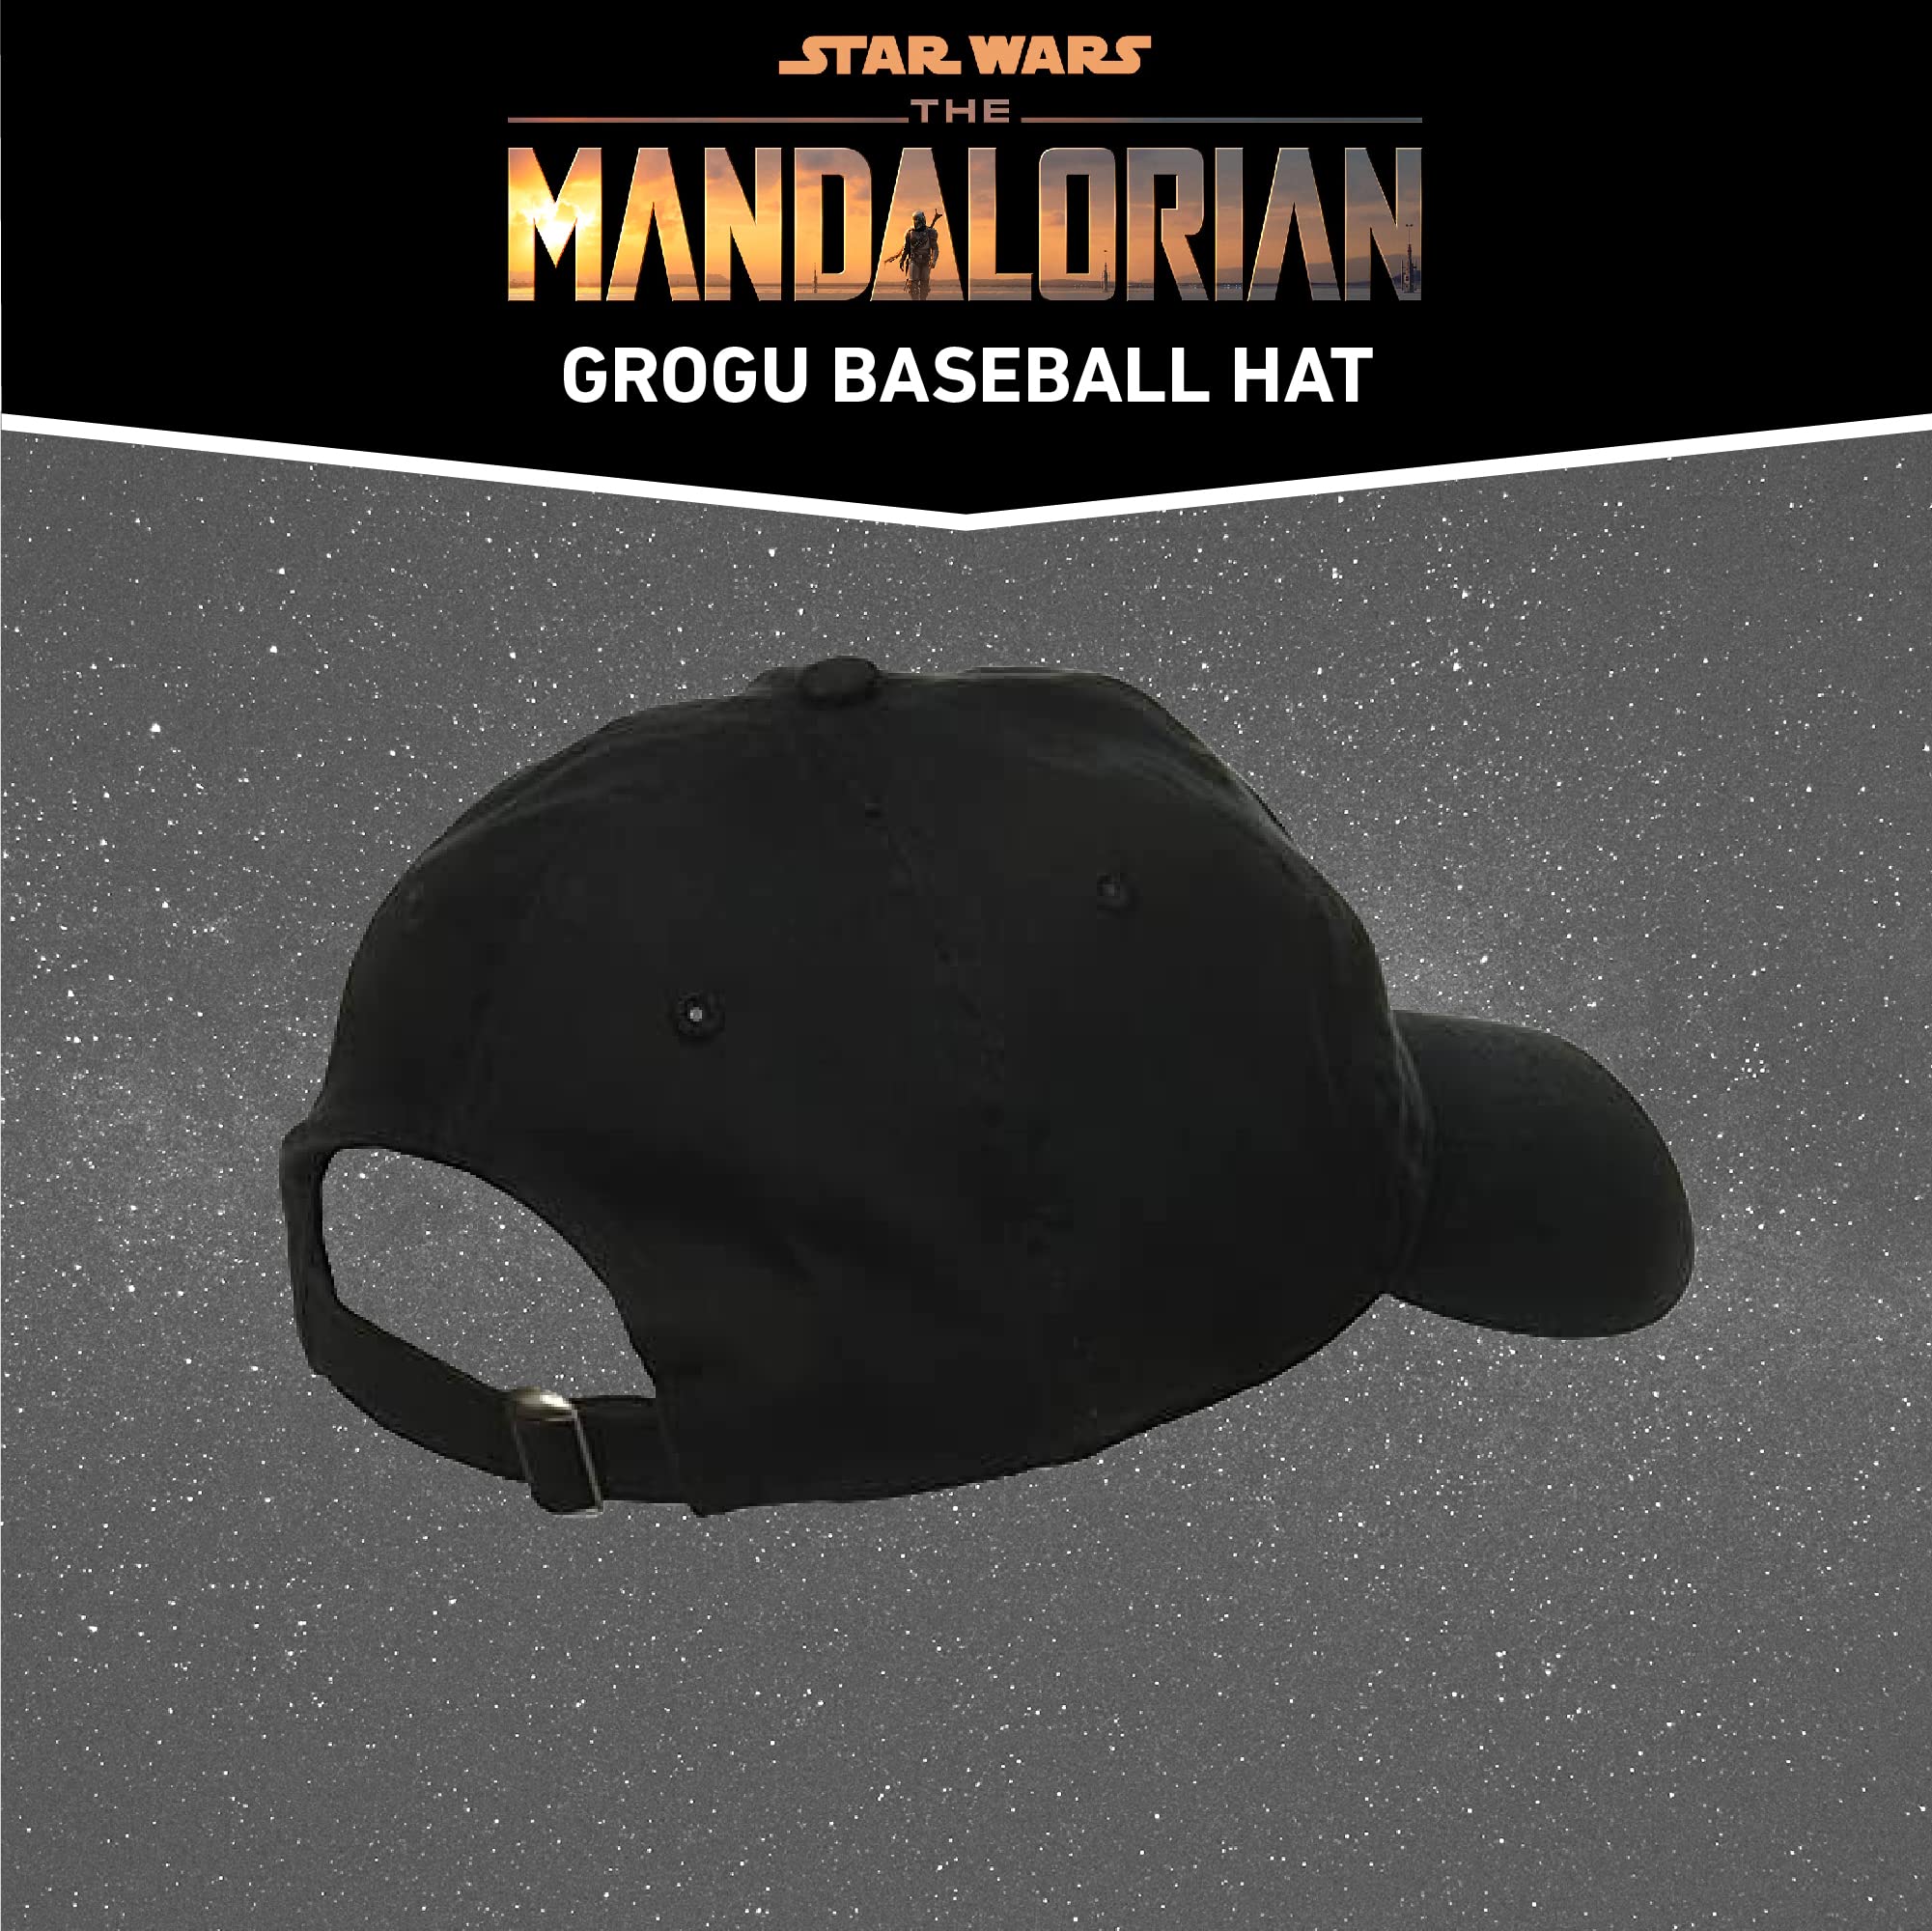 Star Wars The Mandalorian The Child Cotton Adjustable Baseball Cap, Grogu Dad Hat